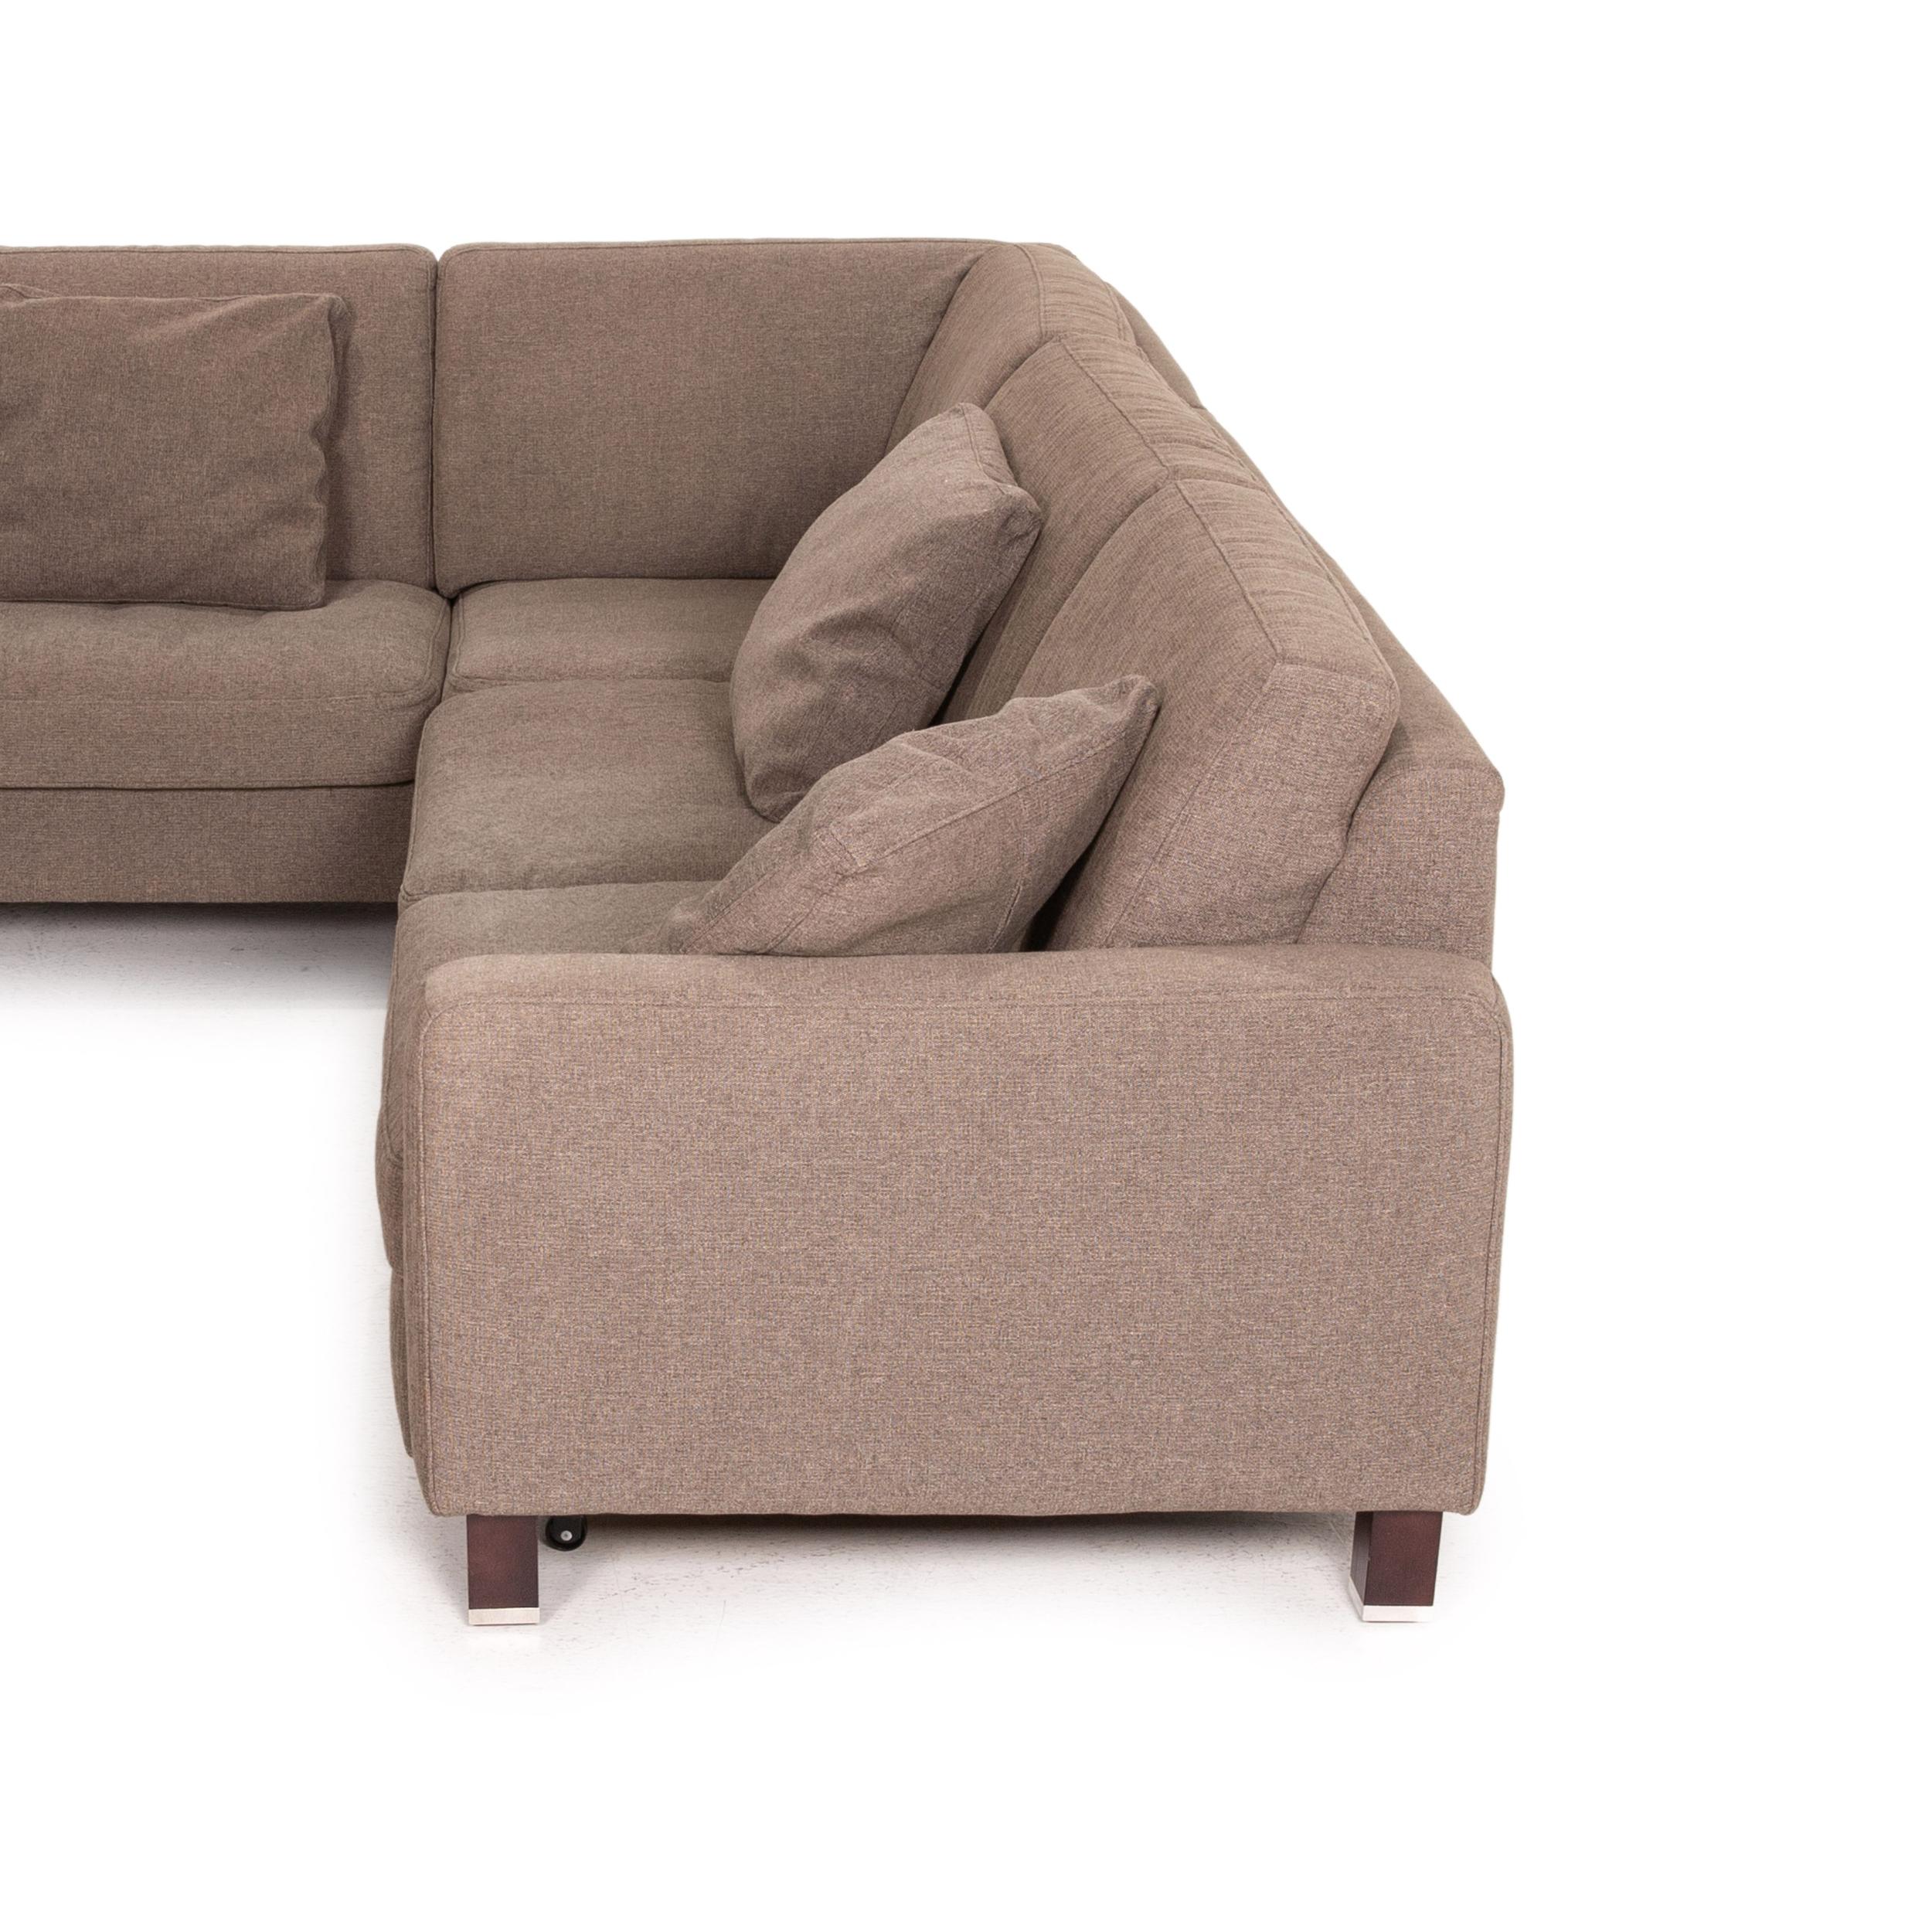 Ewald Schillig Fabric Sofa Set Gray Brown Function Sleeping Function Sofa Bed 5